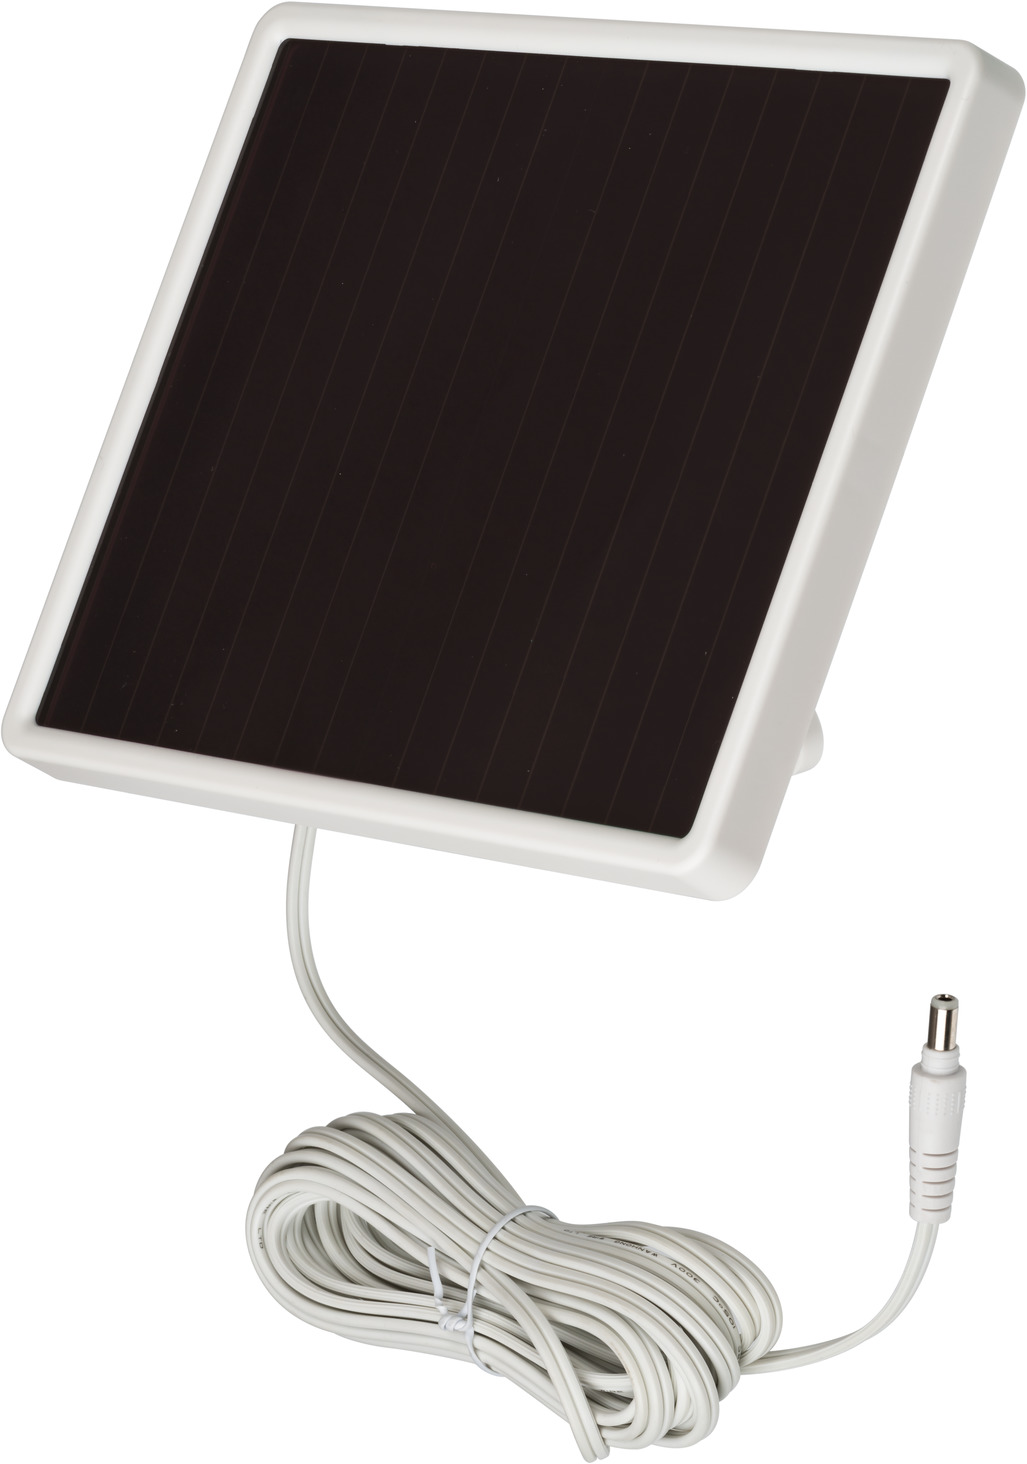 Solar brennenstuhl® 800 weiss mit SOL Infrarot-Bewegungsmelder | LED-Strahler IP44